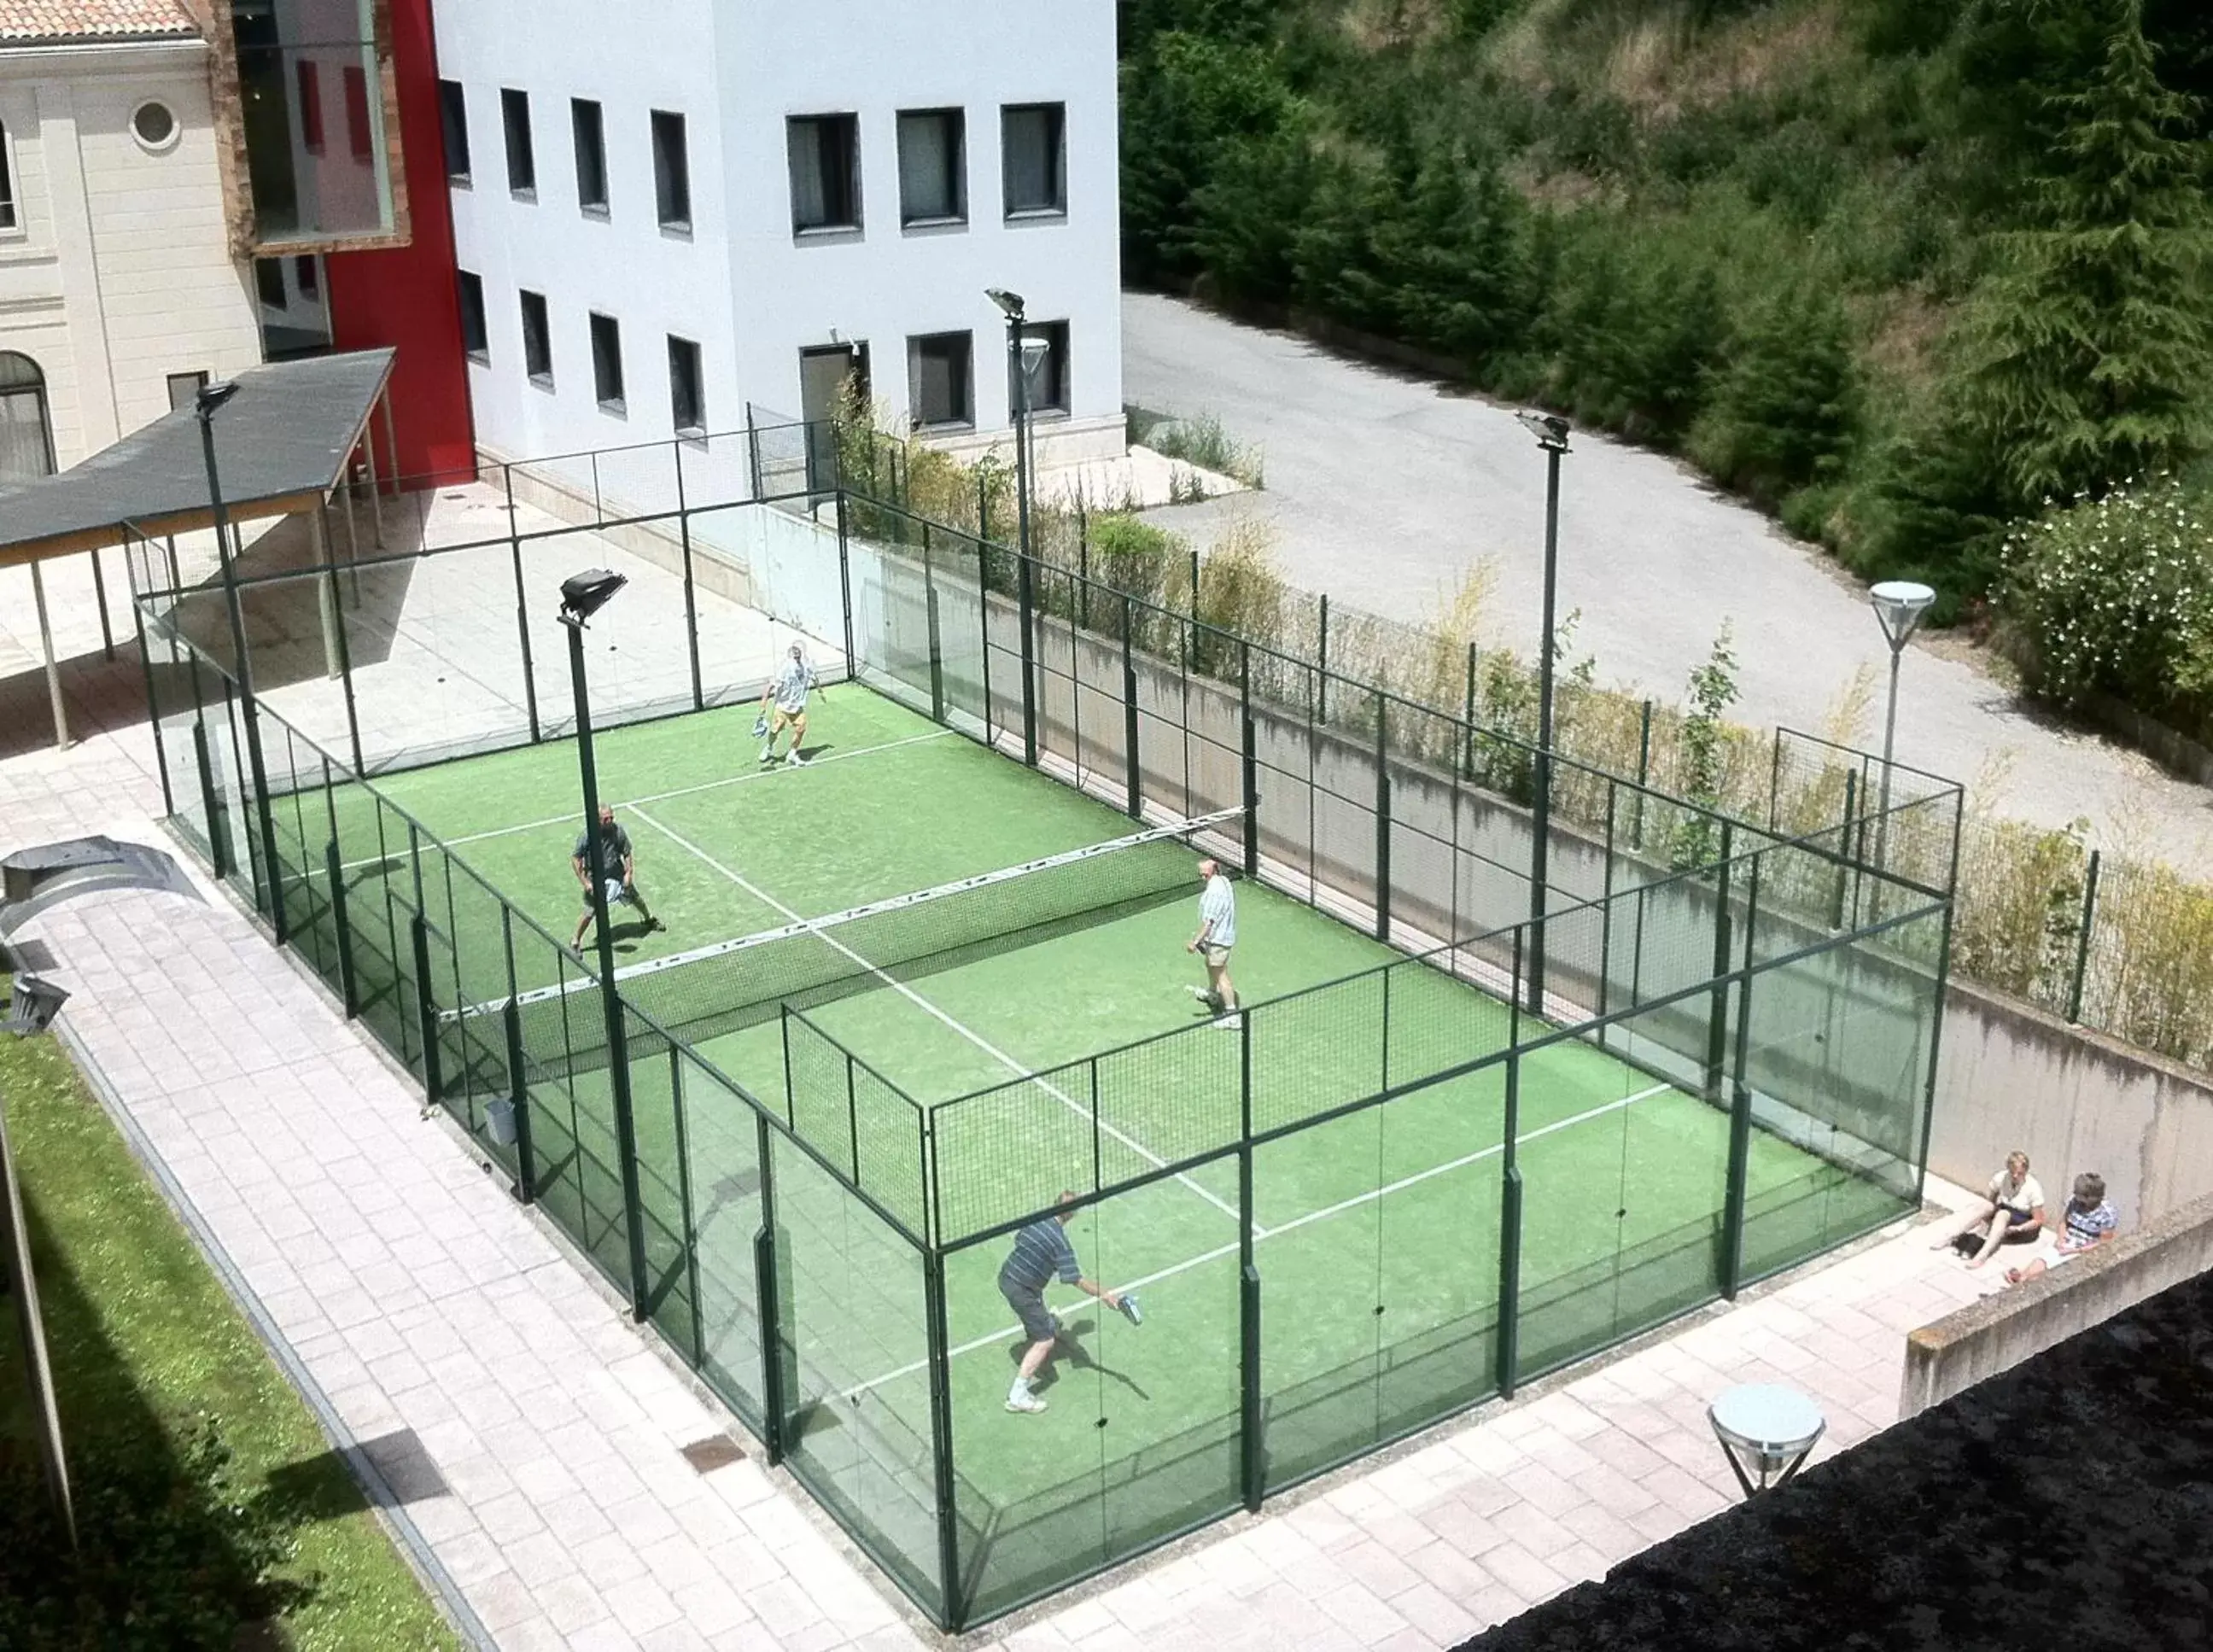 Off site, Tennis/Squash in Abba Burgos